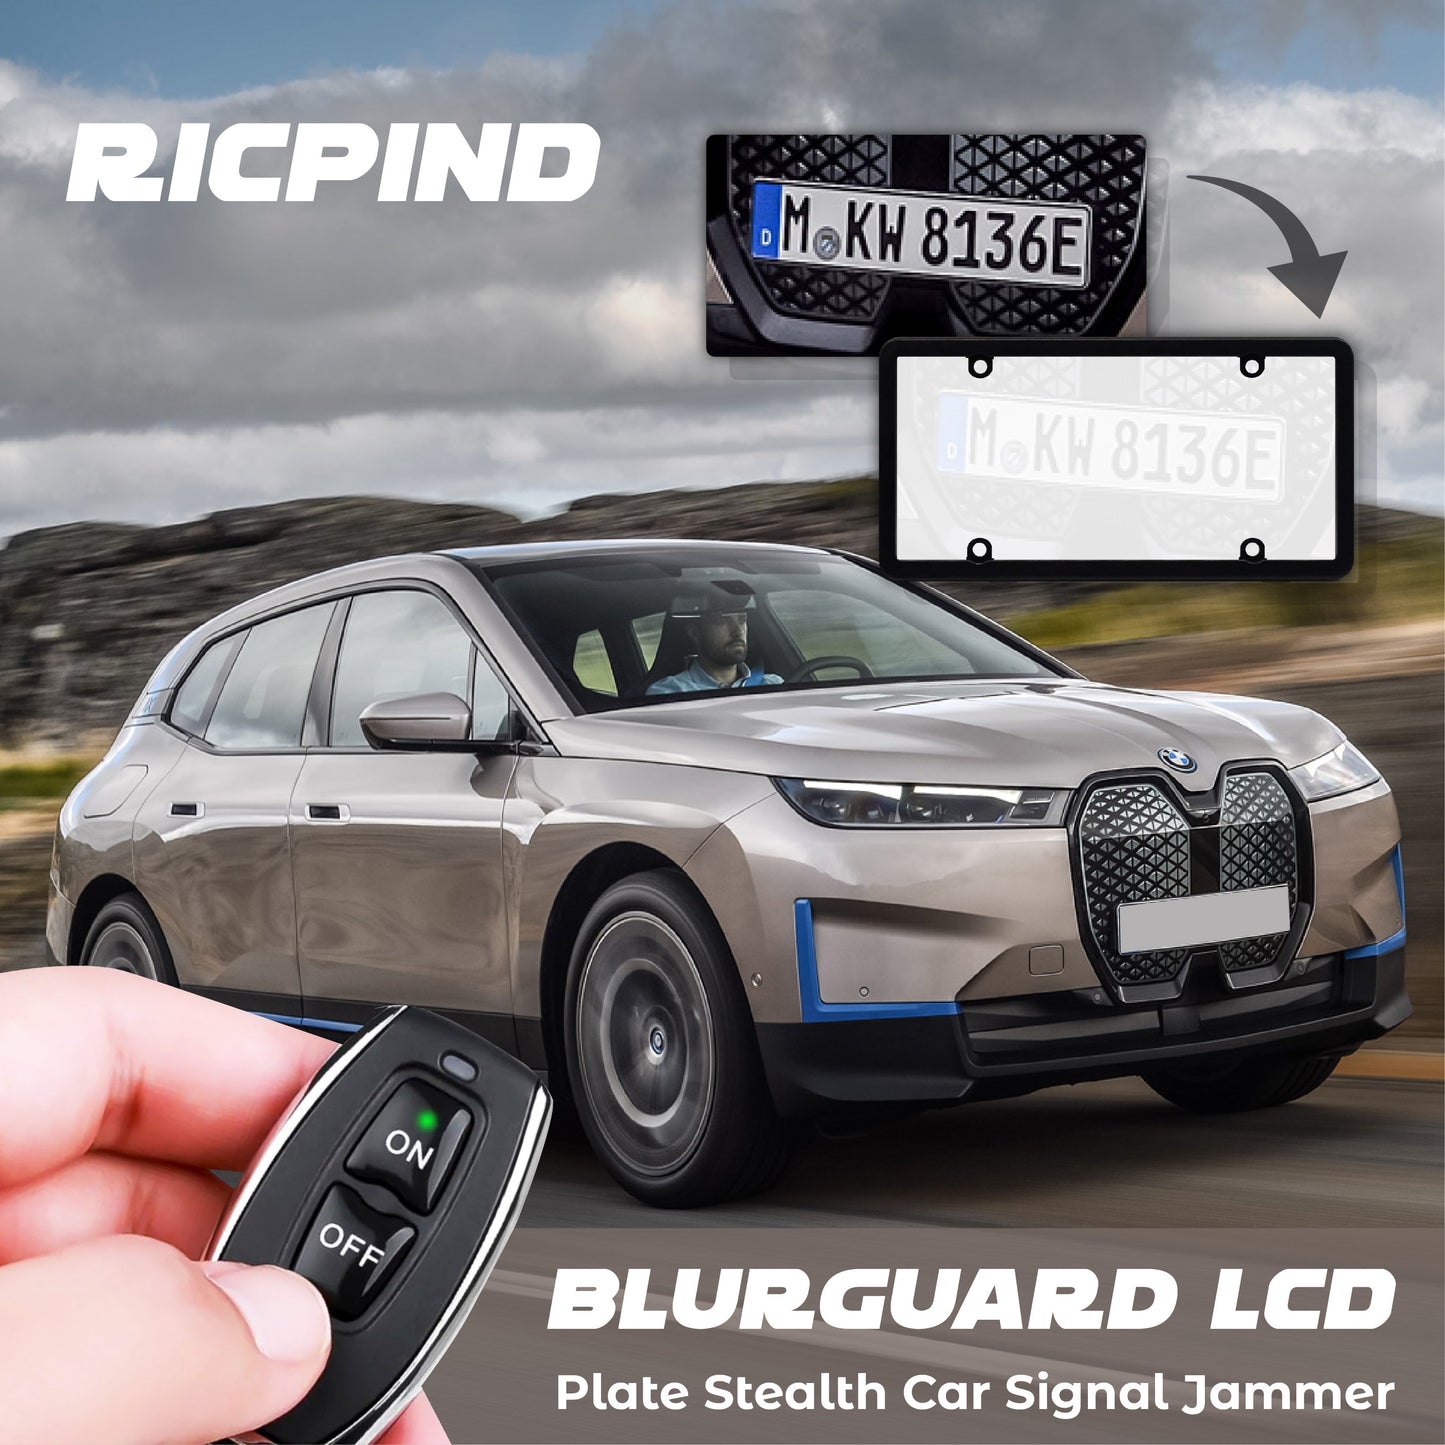 RICPIND 2 BlurGuard LCD Plate Stealth Car Signal Jammer